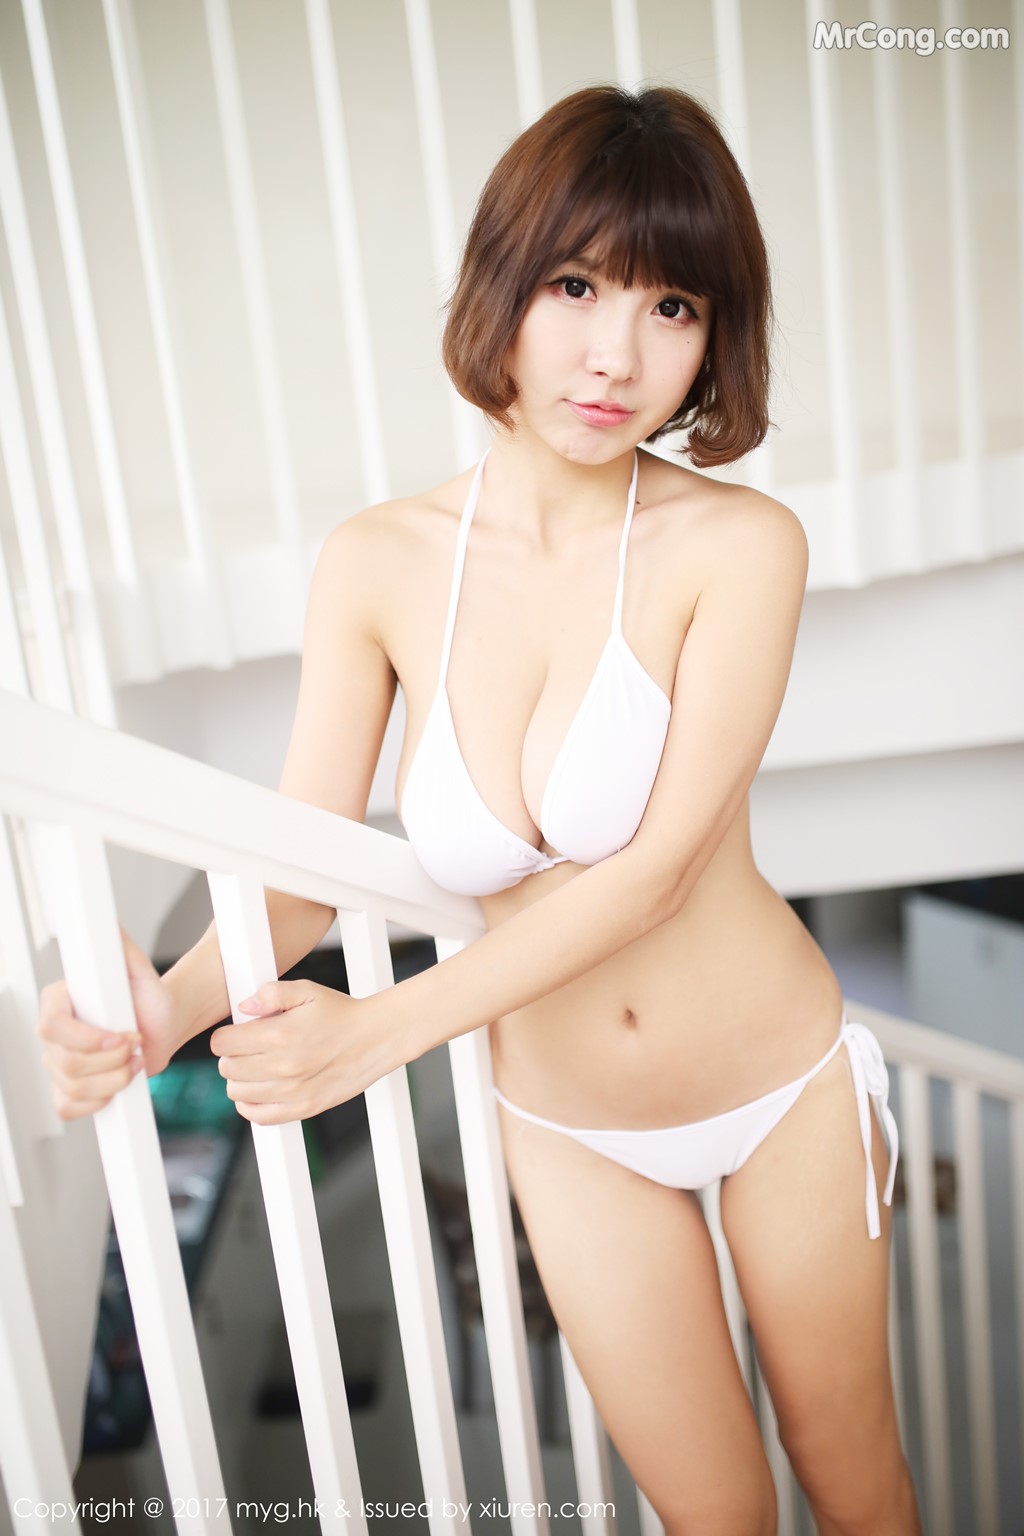 MyGirl Vol. 6262: Sunny's model (晓 茜) (75 photos)